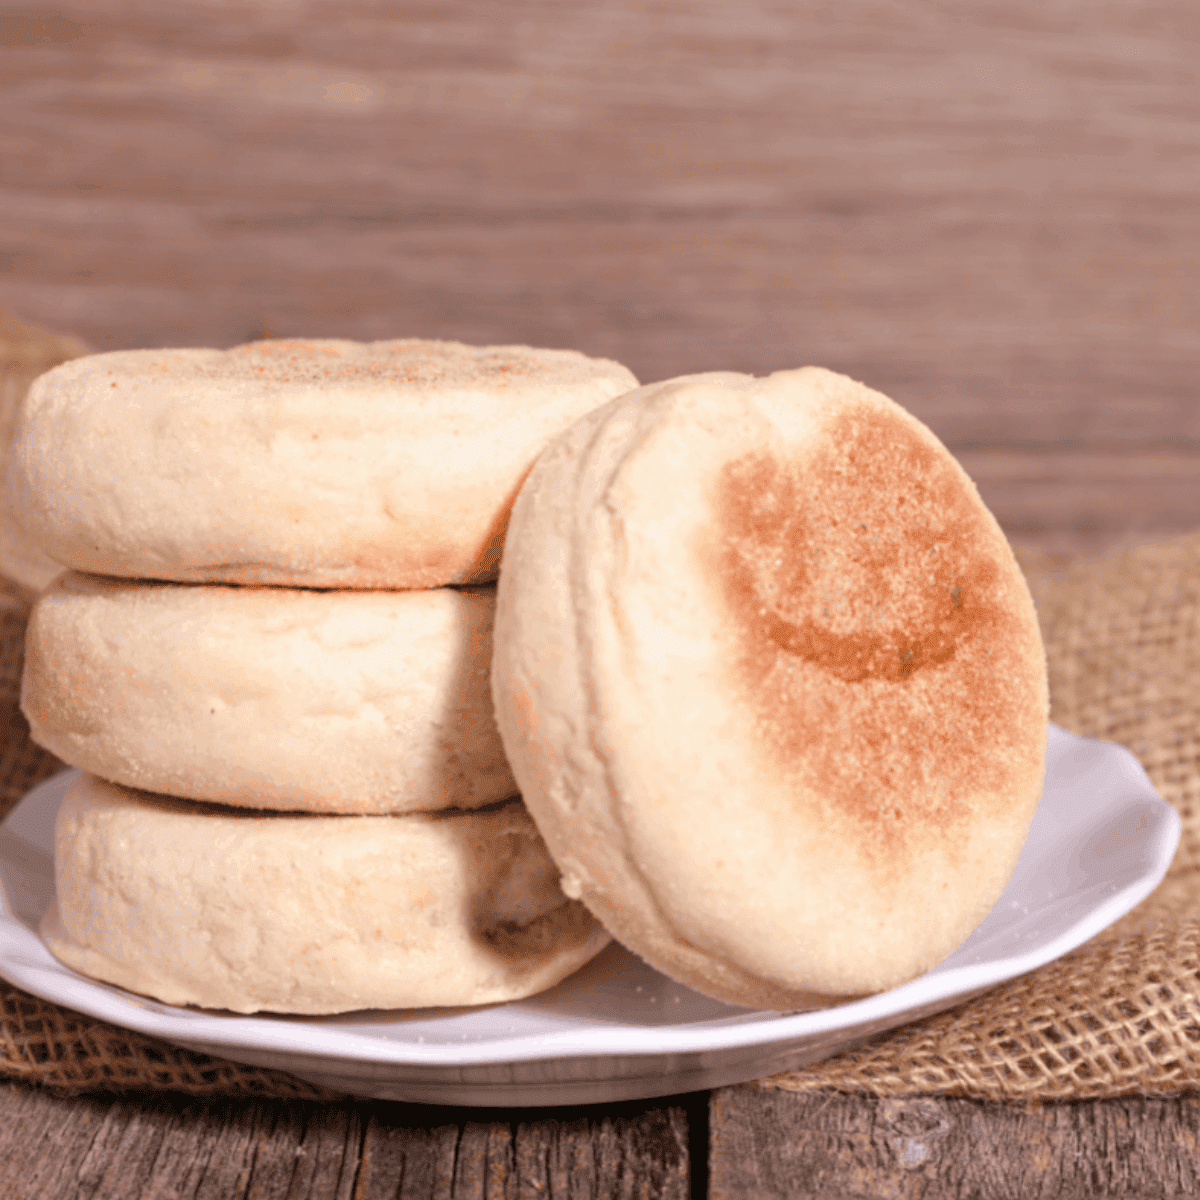 Ingredients Needed For Air Fryer Cinnamon Sugar English Muffins